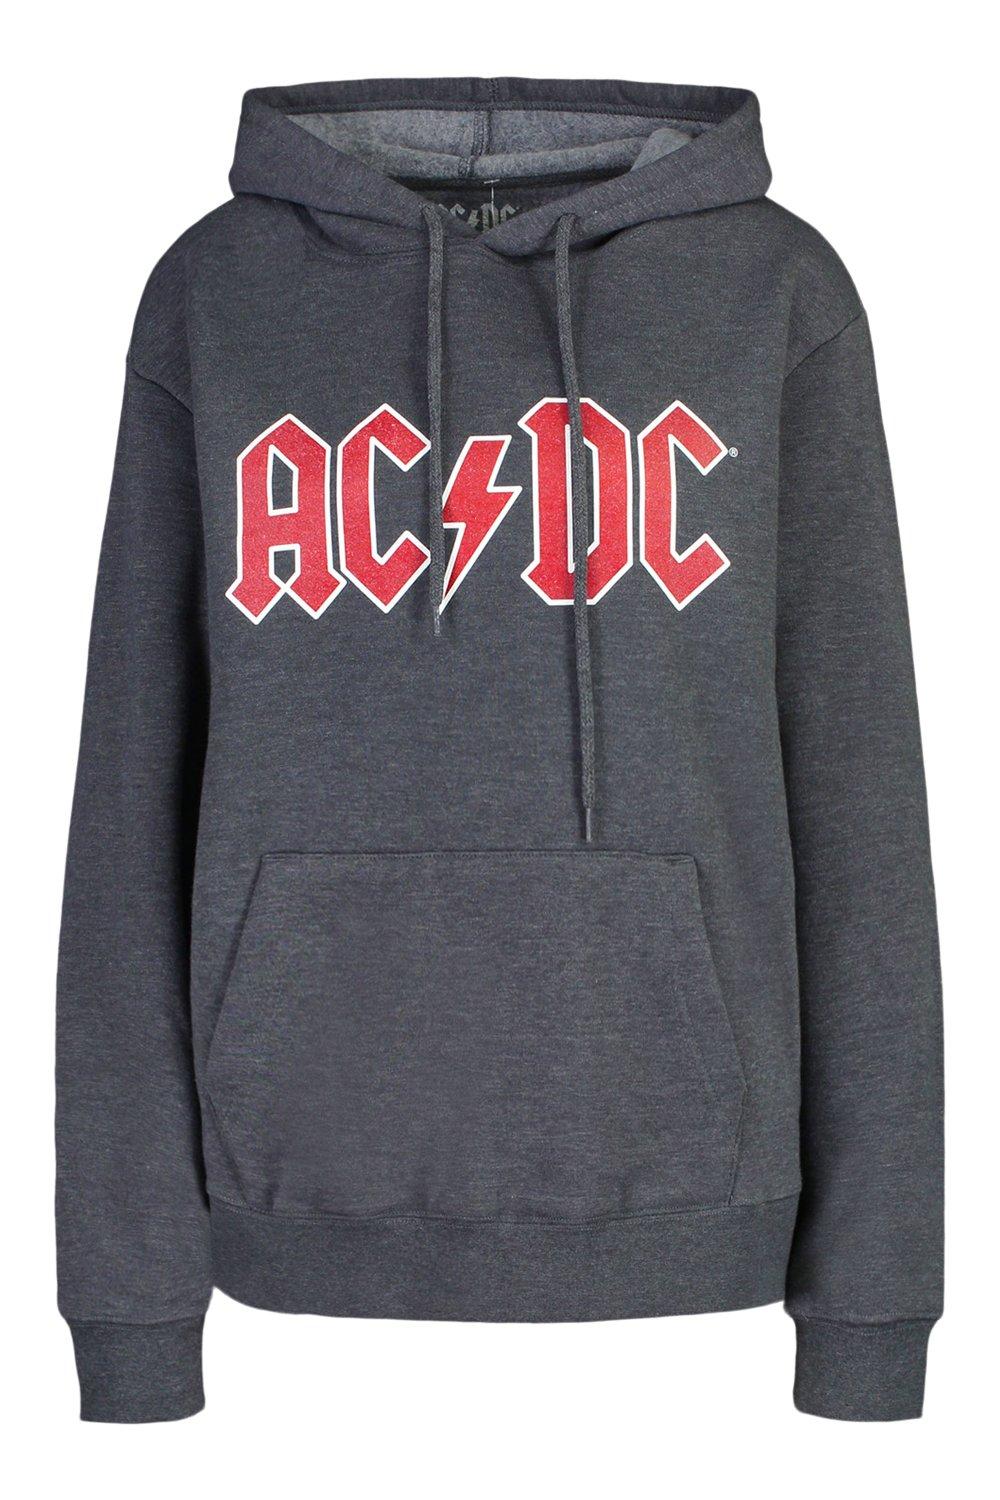 acdc hoodie